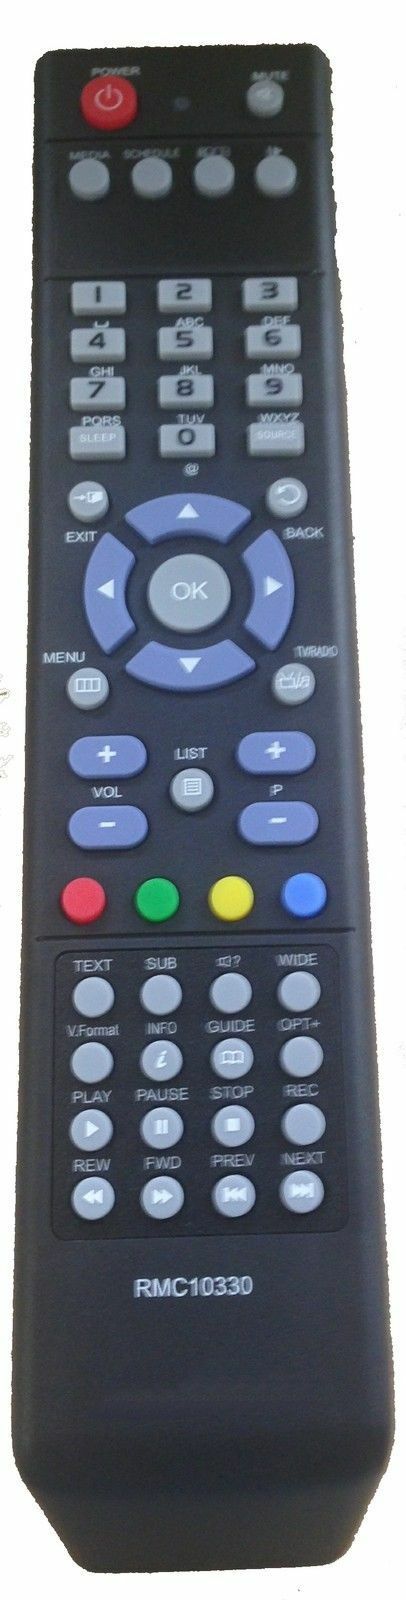 Genuine Remote Control for Dragonsat DS-6000